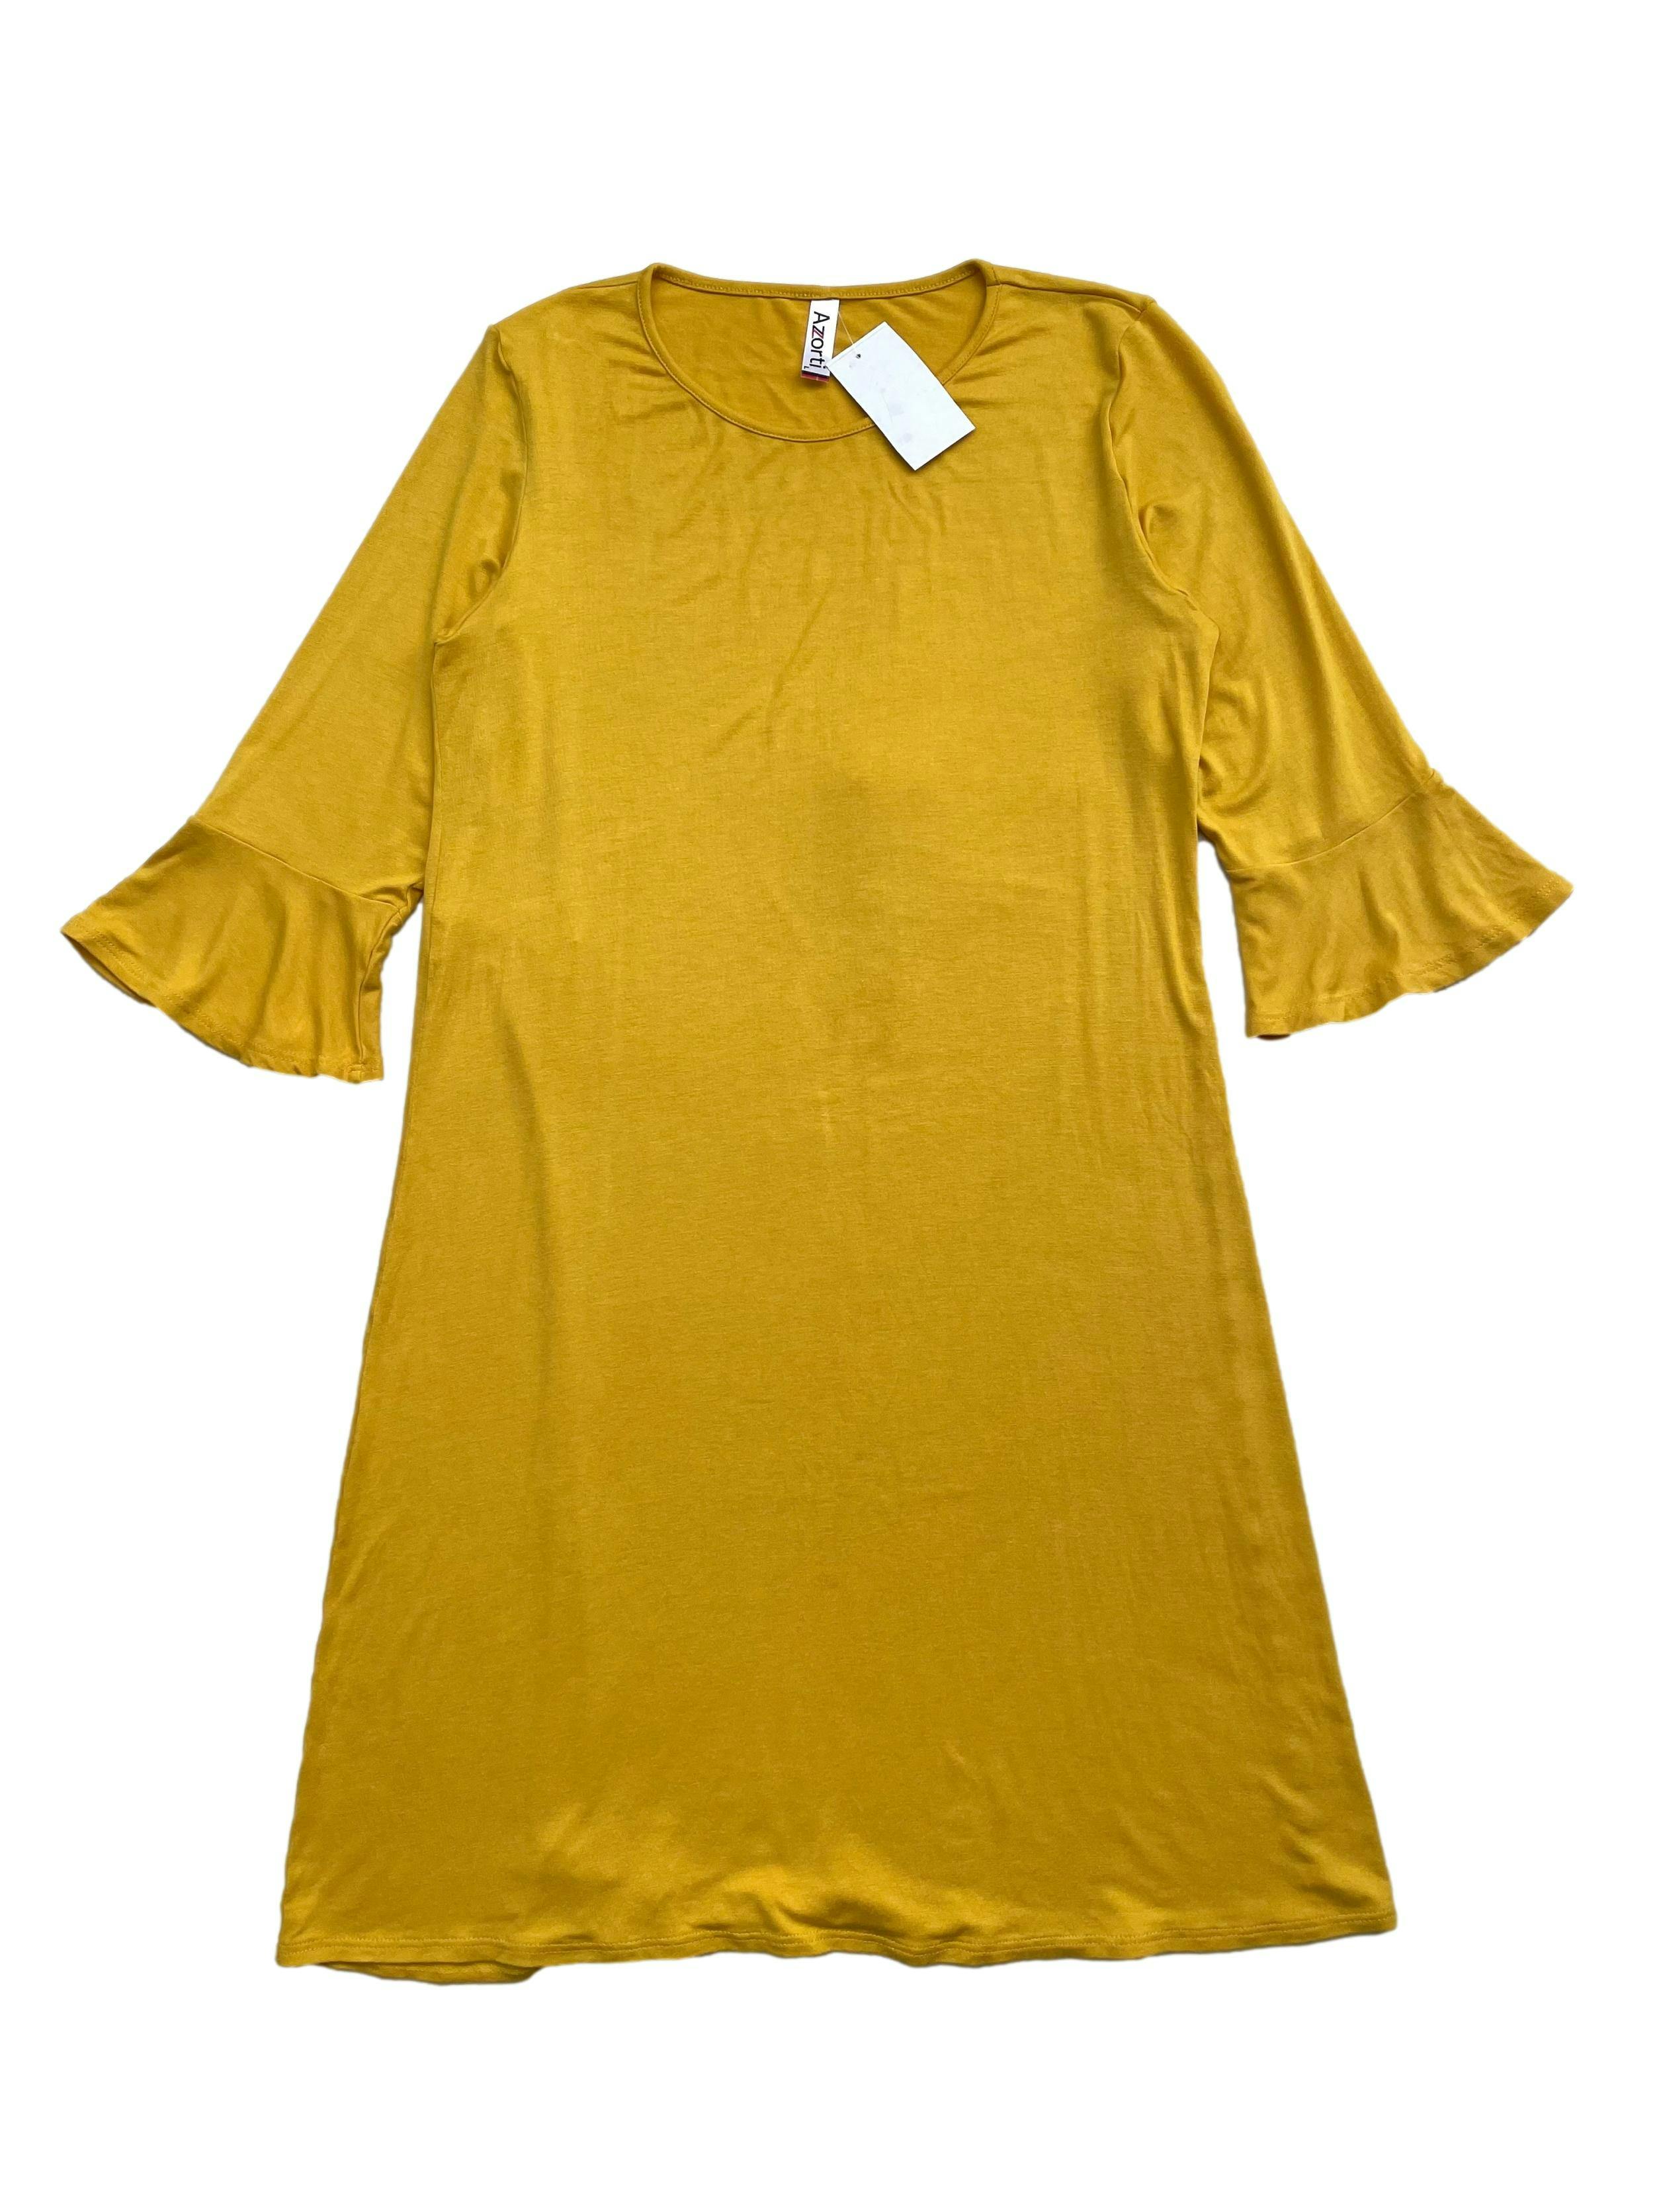 Vestido tipo algodón amarillo, manga 3/4. Busto 95cm sin estirar Largo 82cm